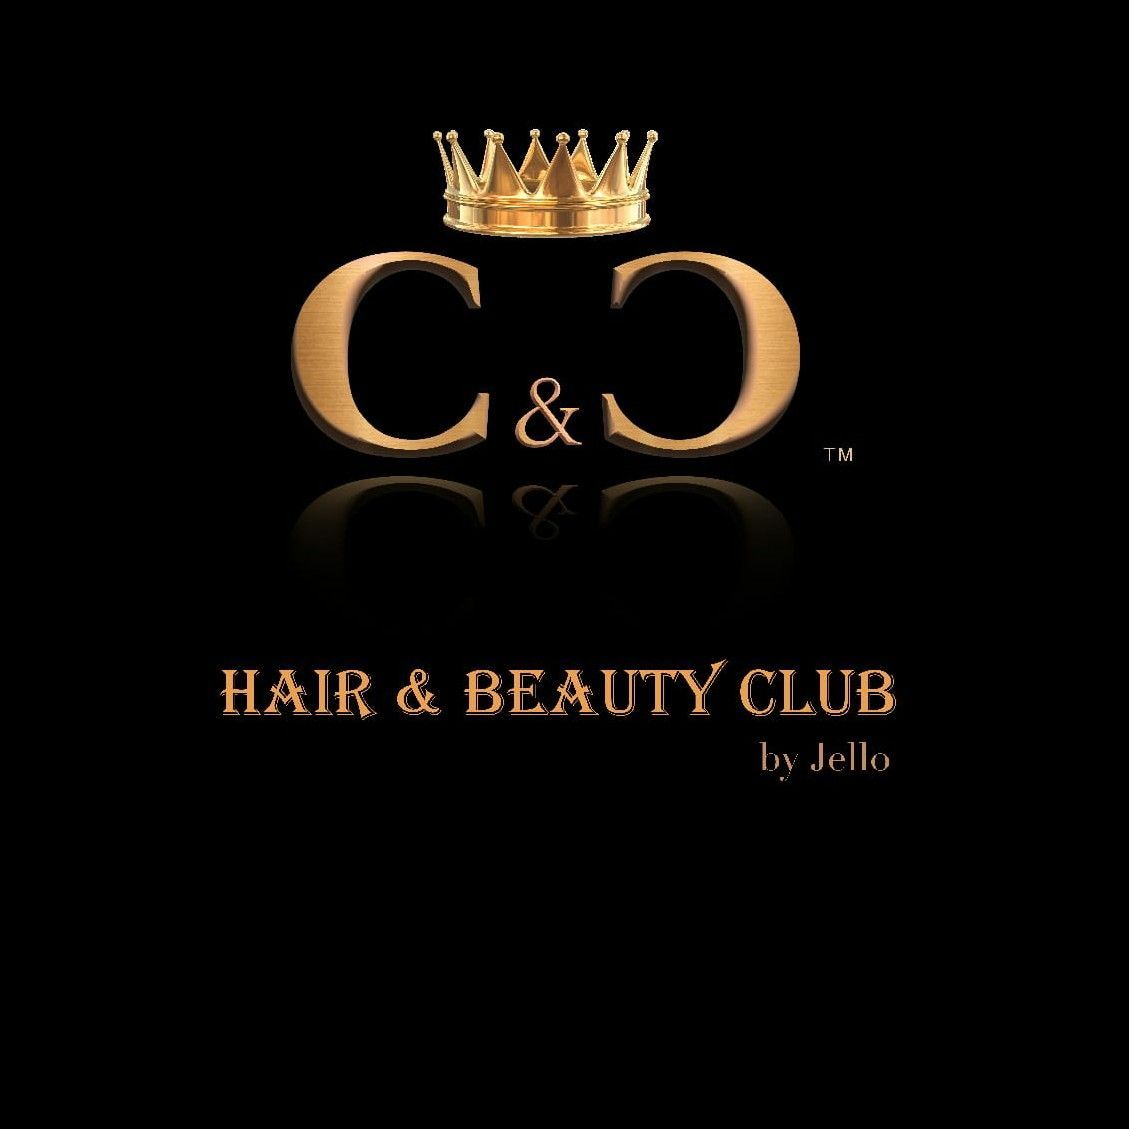 C&C HAIR AND BEAUTY CLUB, 10 St Giles' Street, NN1 1JA, Northampton